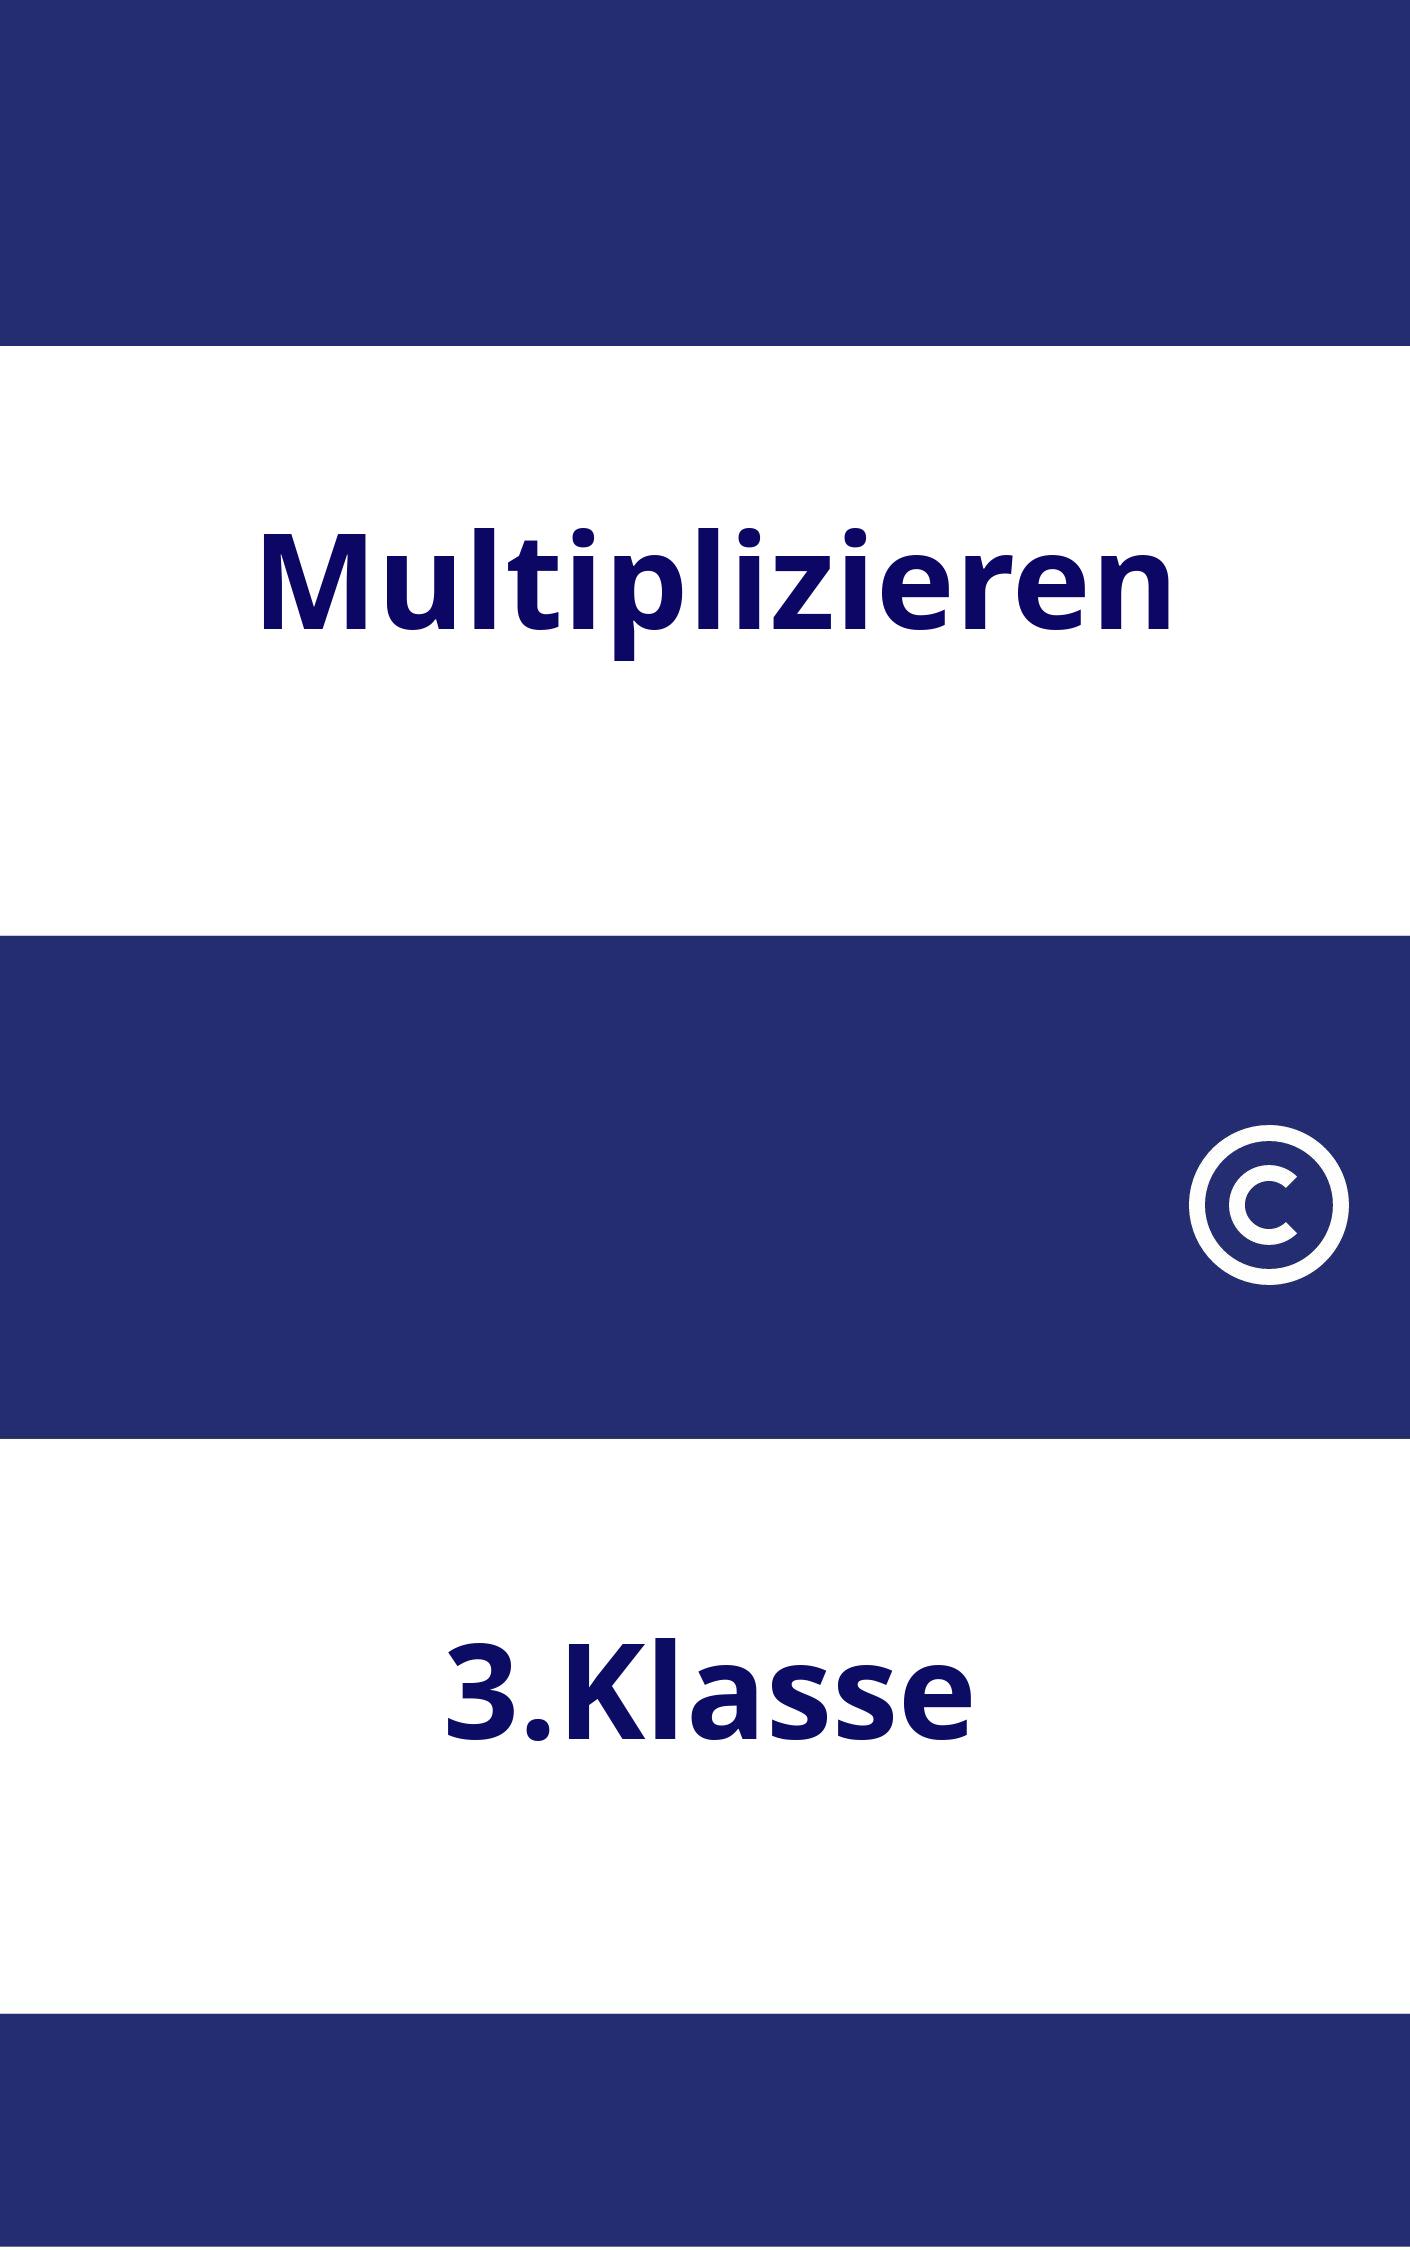 Multiplizieren 3.Klasse Arbeitsblätter PDF